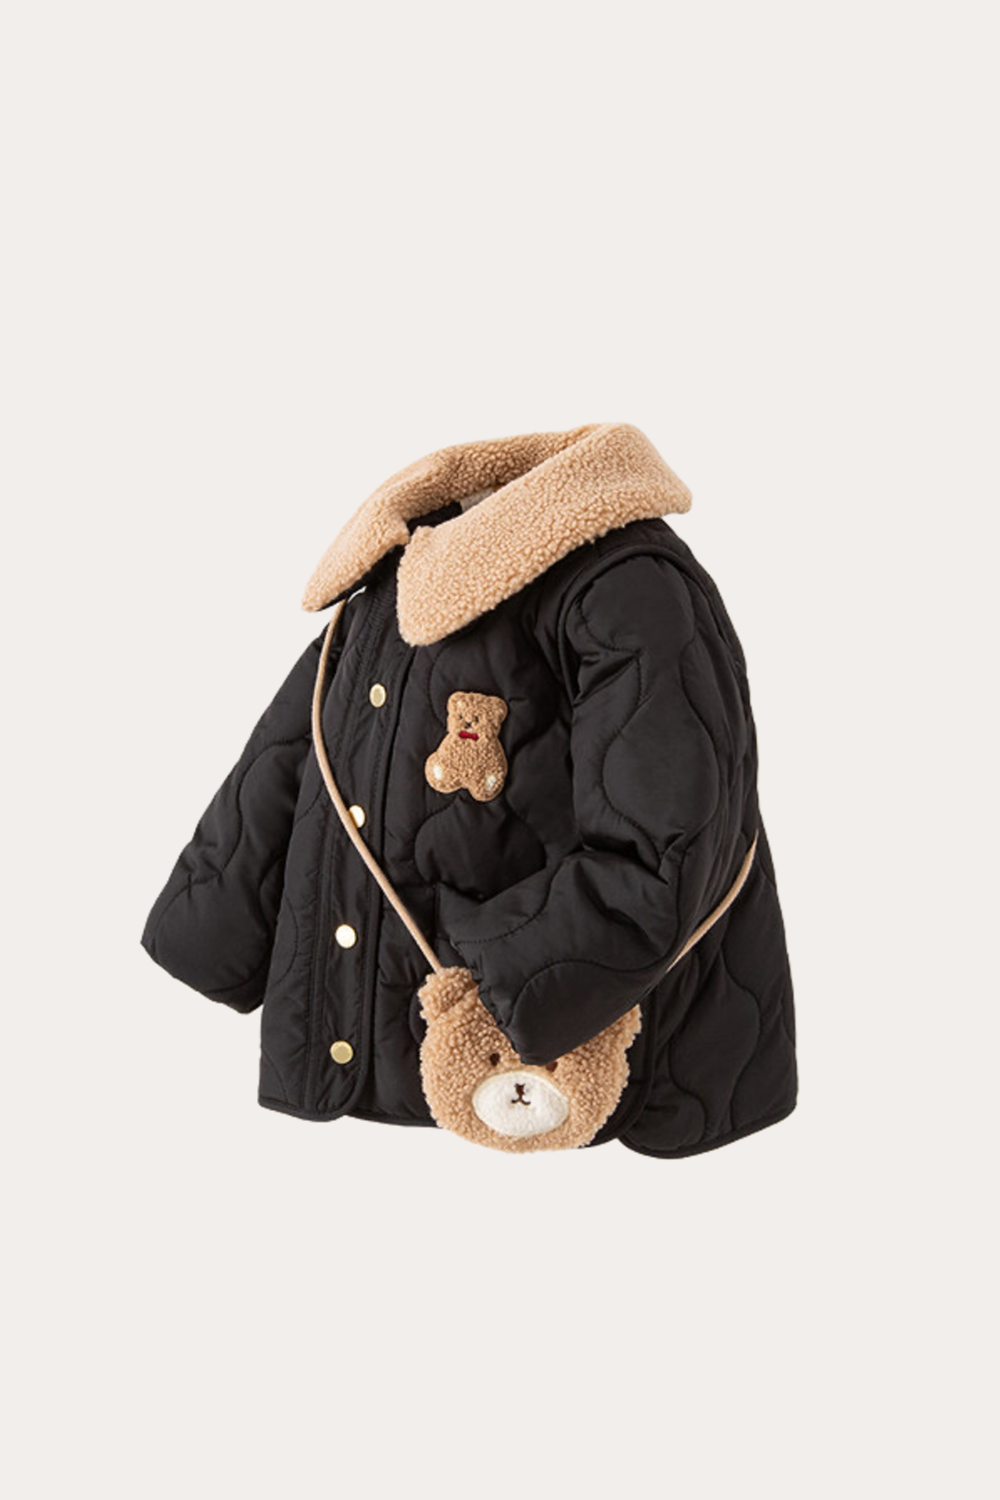 Bear Jacket Coat Warm With Wallet